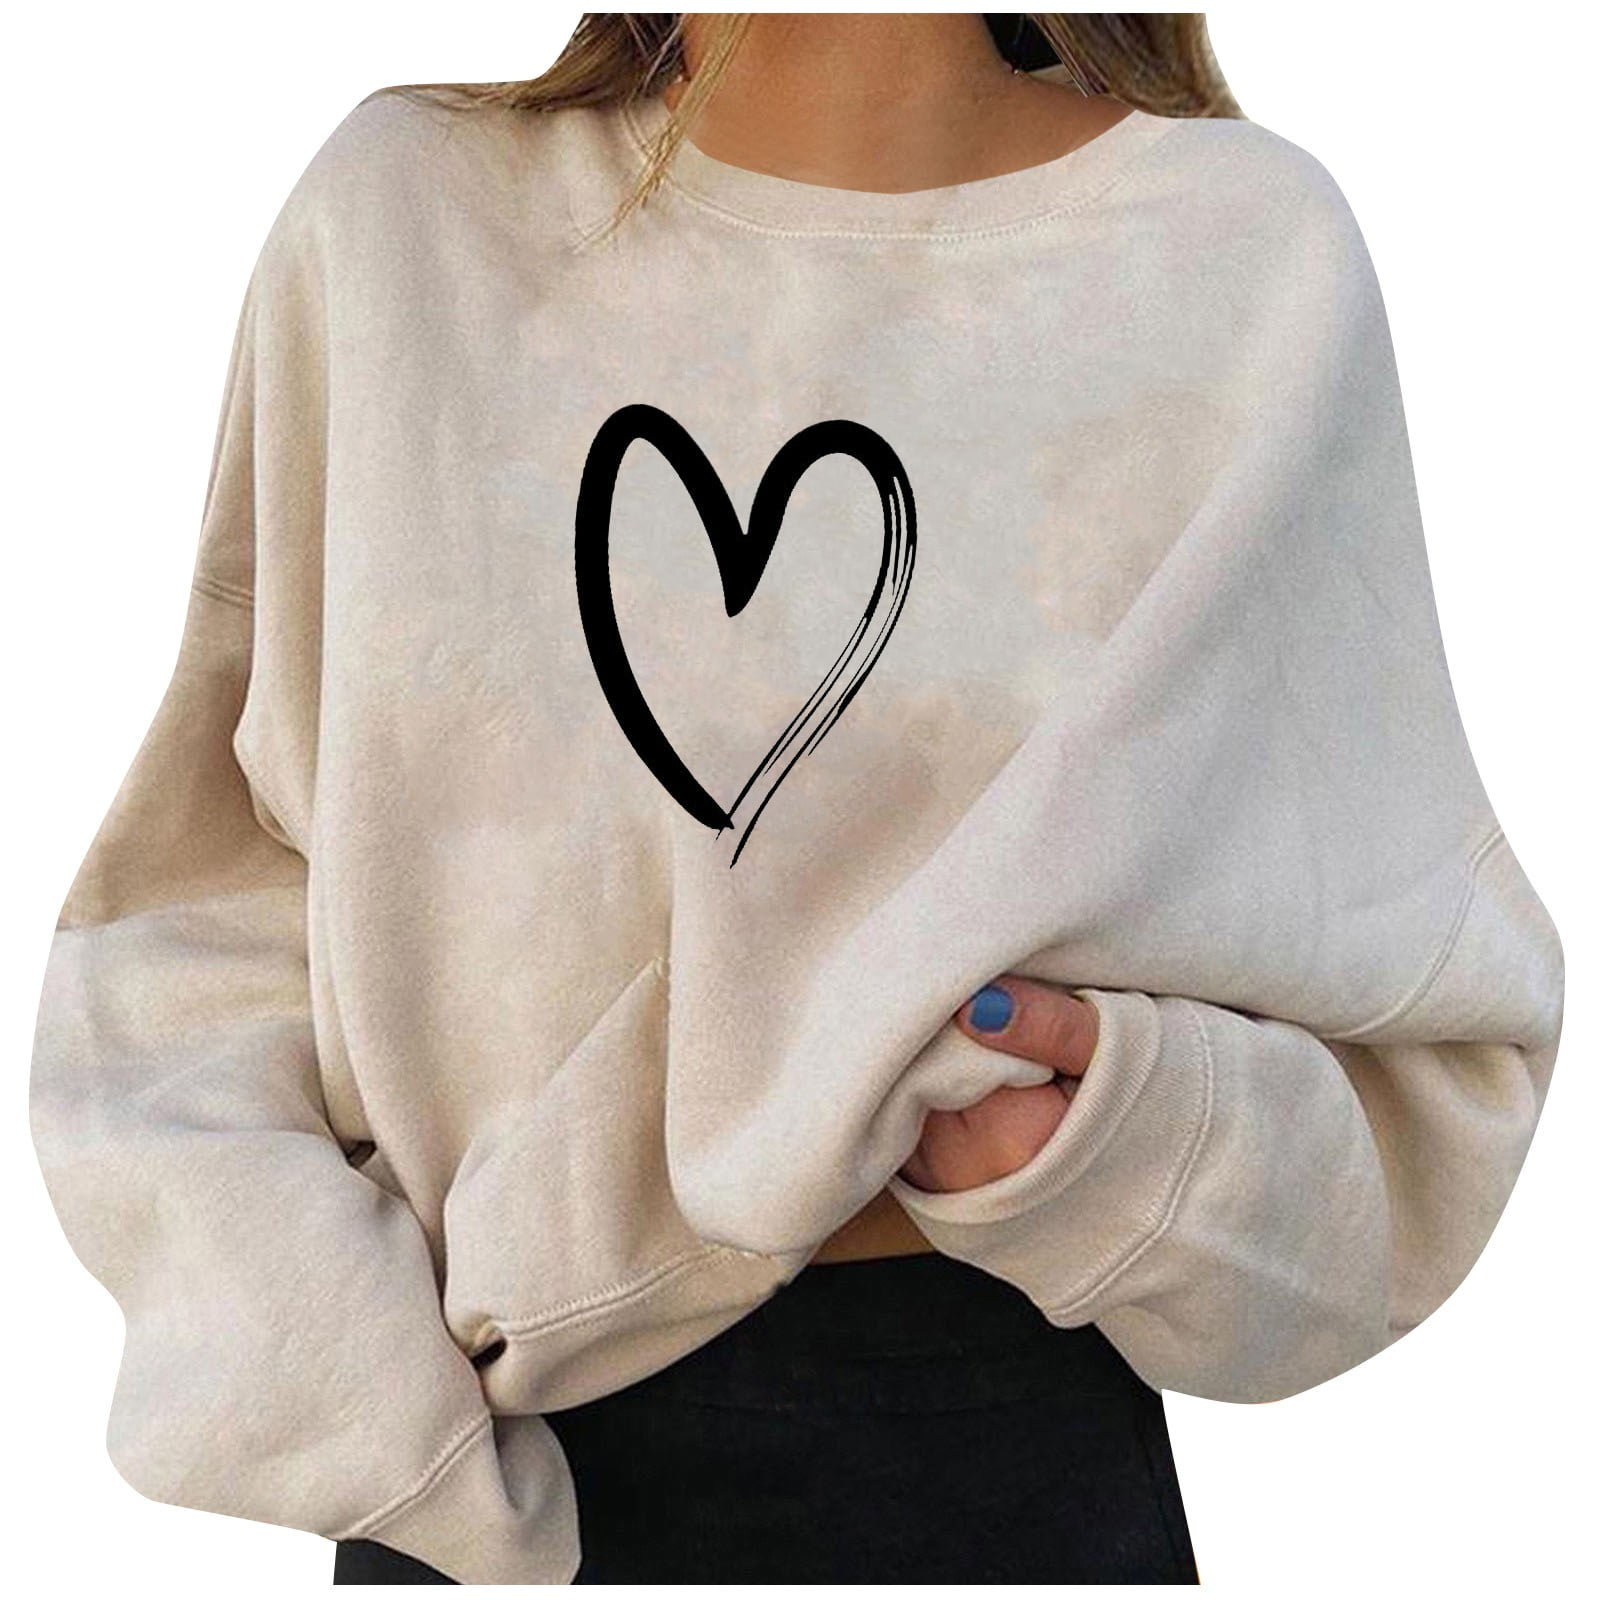 Thinking nonsense heart logo T-shirt, hoodie, sweater, longsleeve